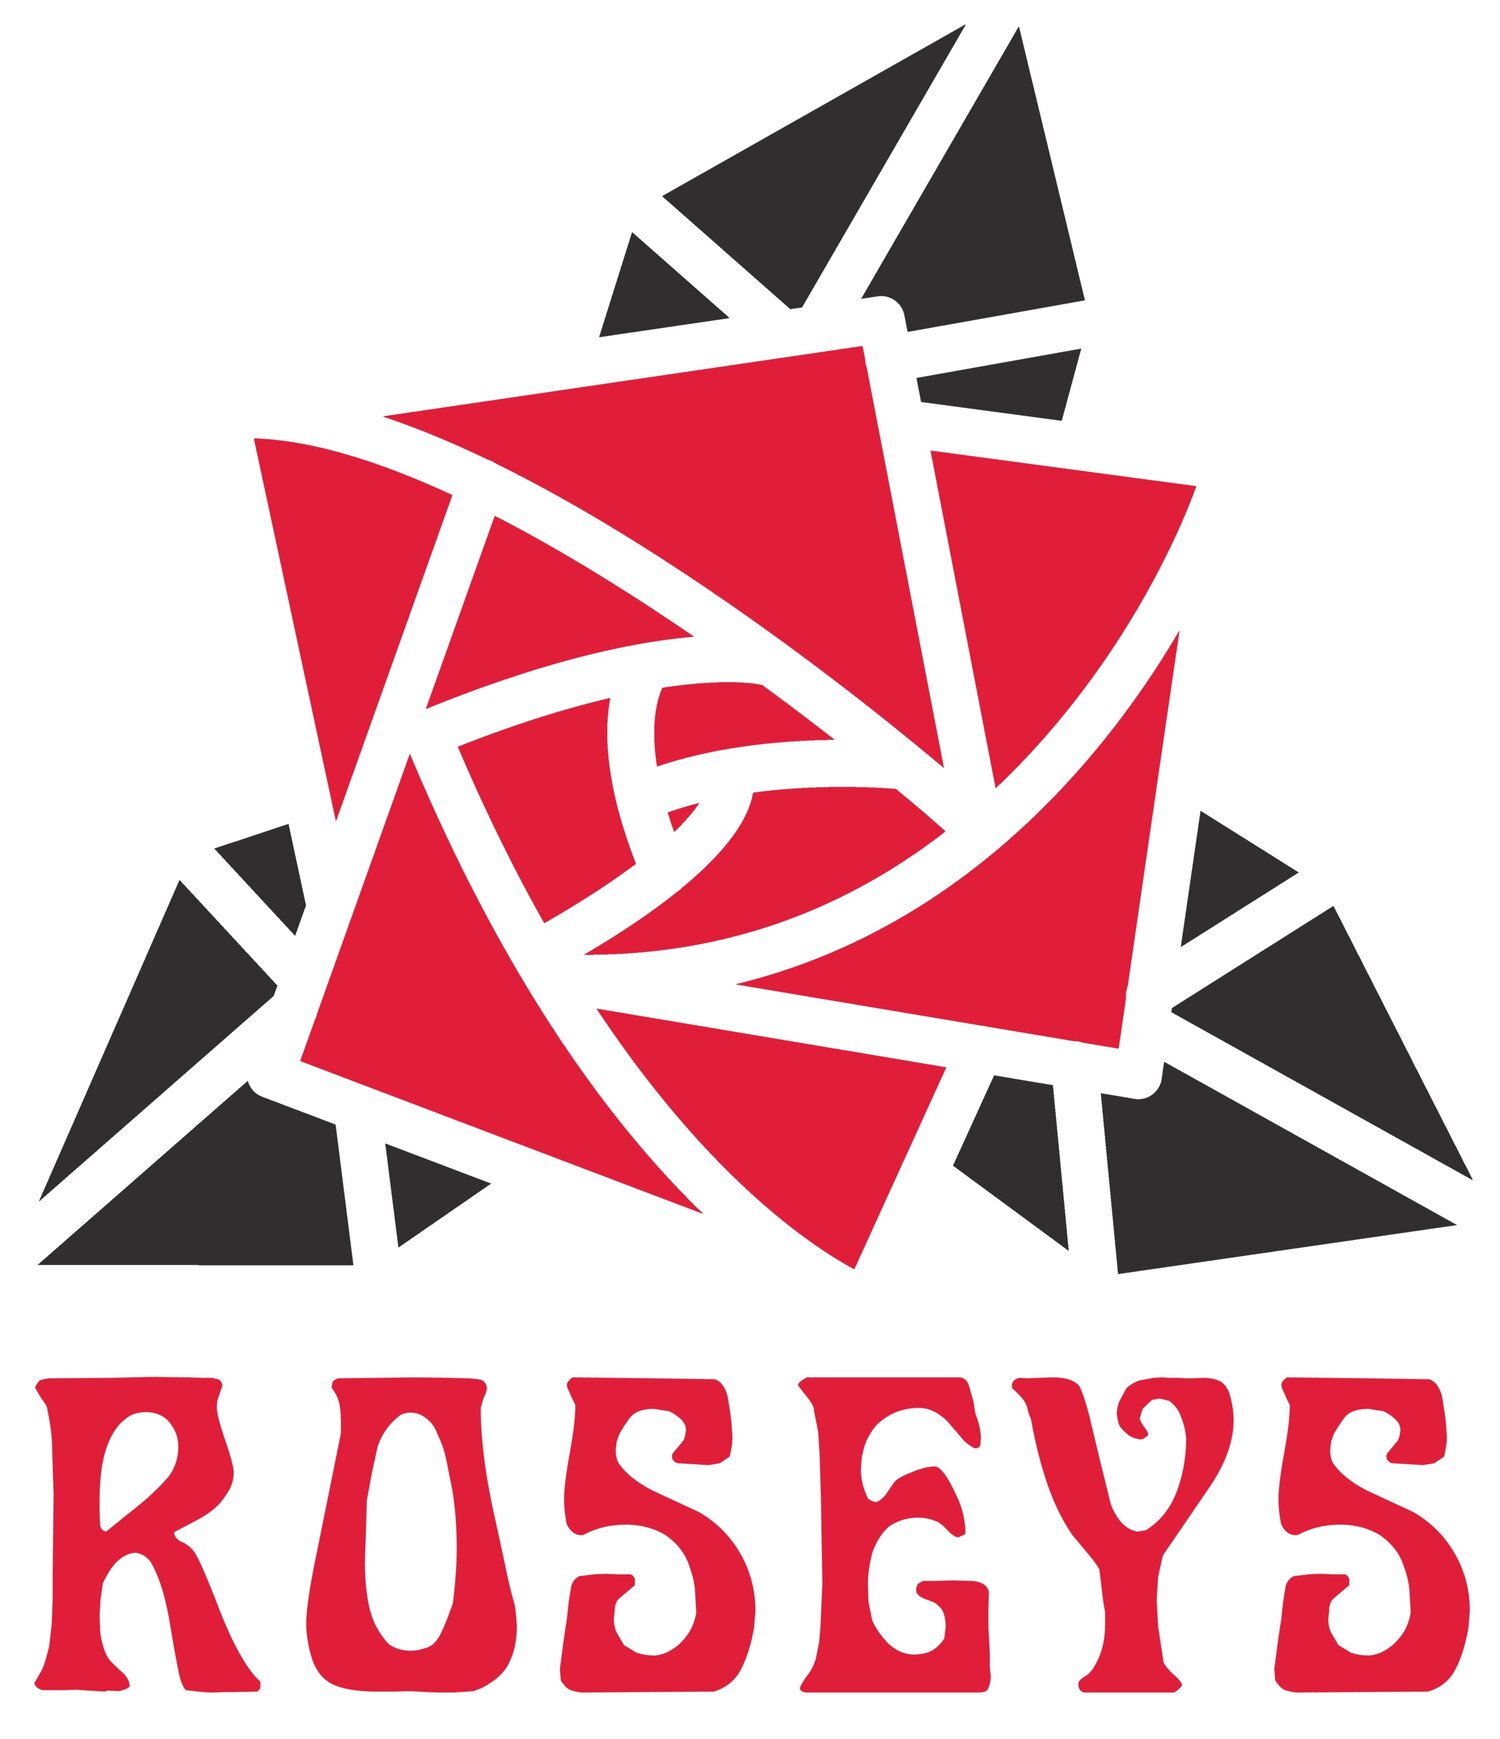 Roseys - Rose Colored Sunglasses